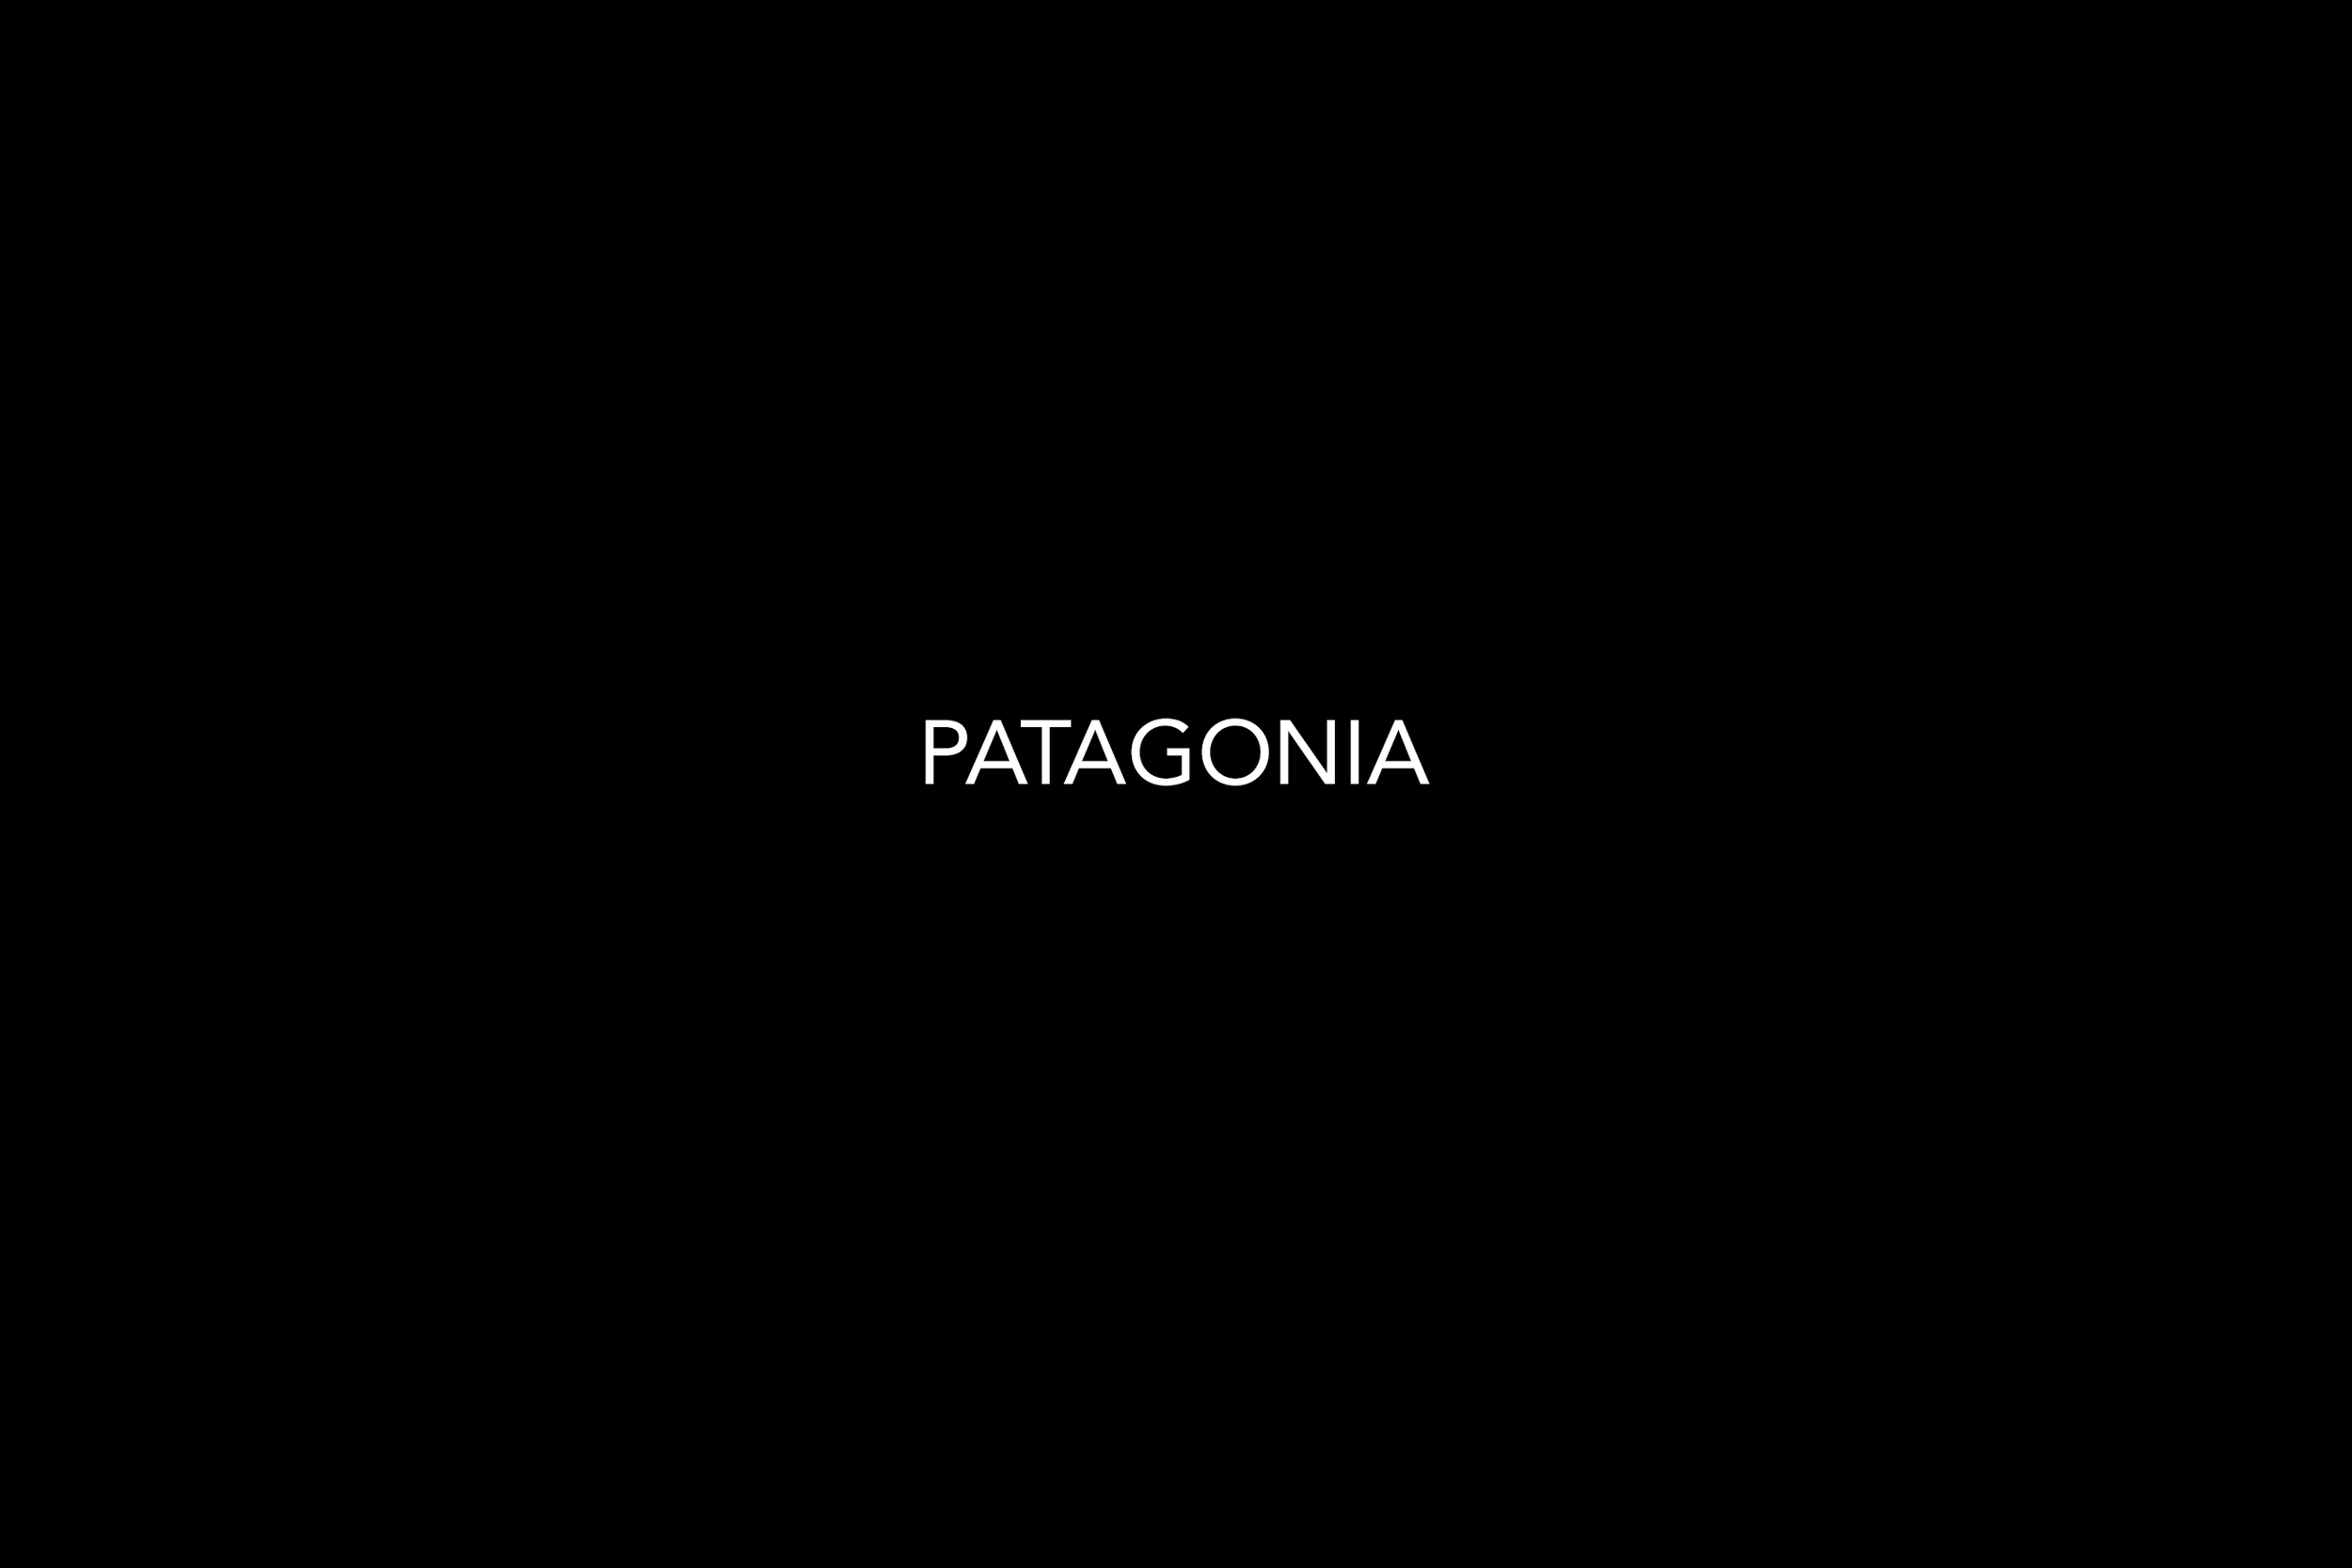 patagoniatext.png